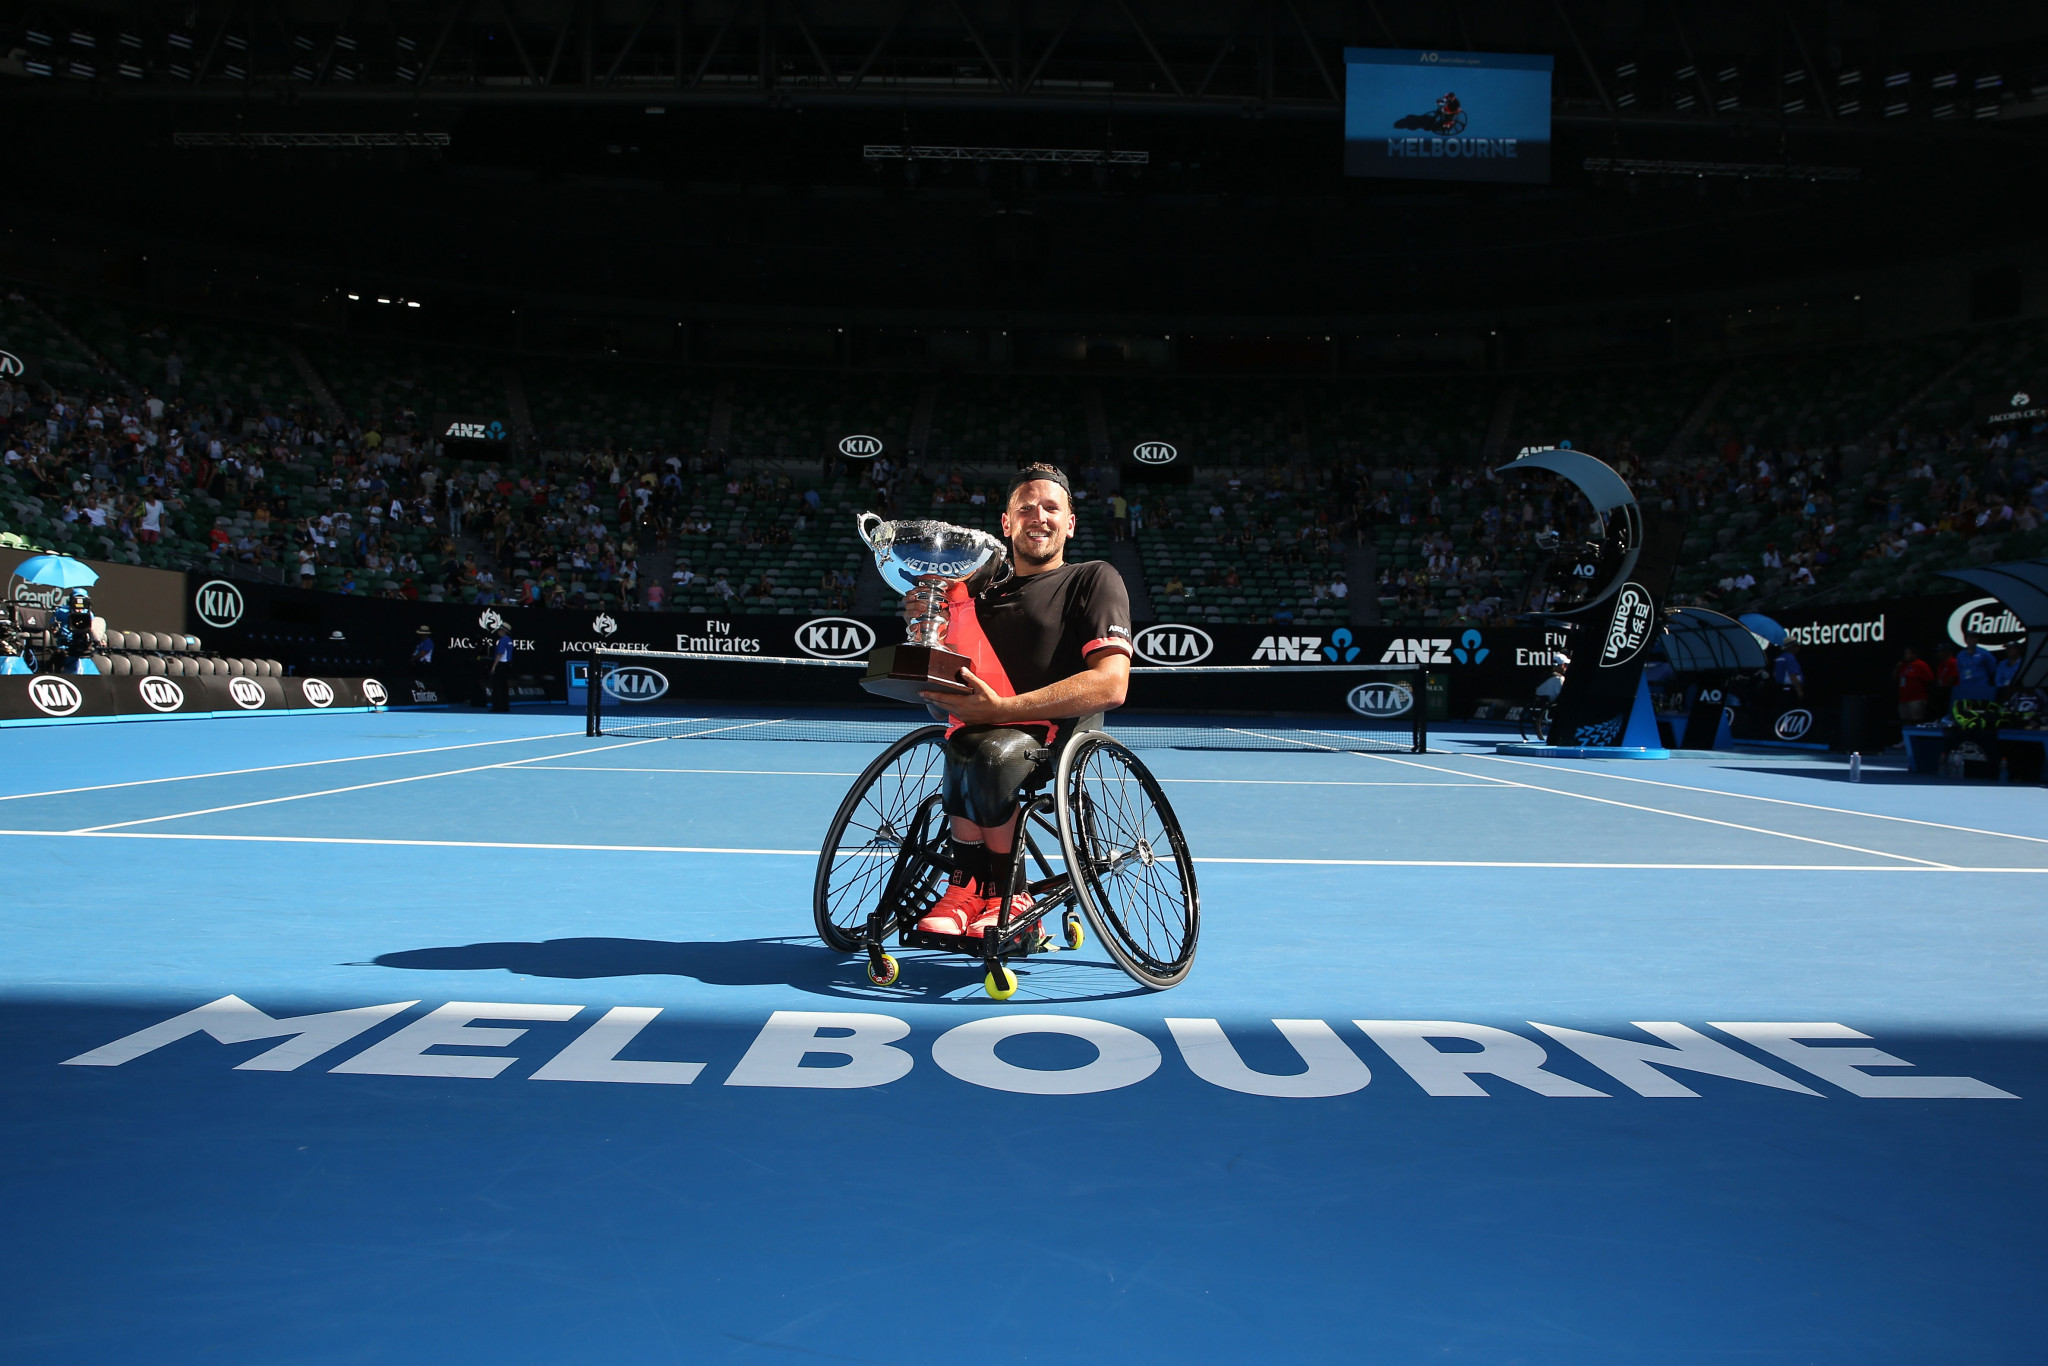 Alcott clinches fourth consecutive quad singles title at Australian Open